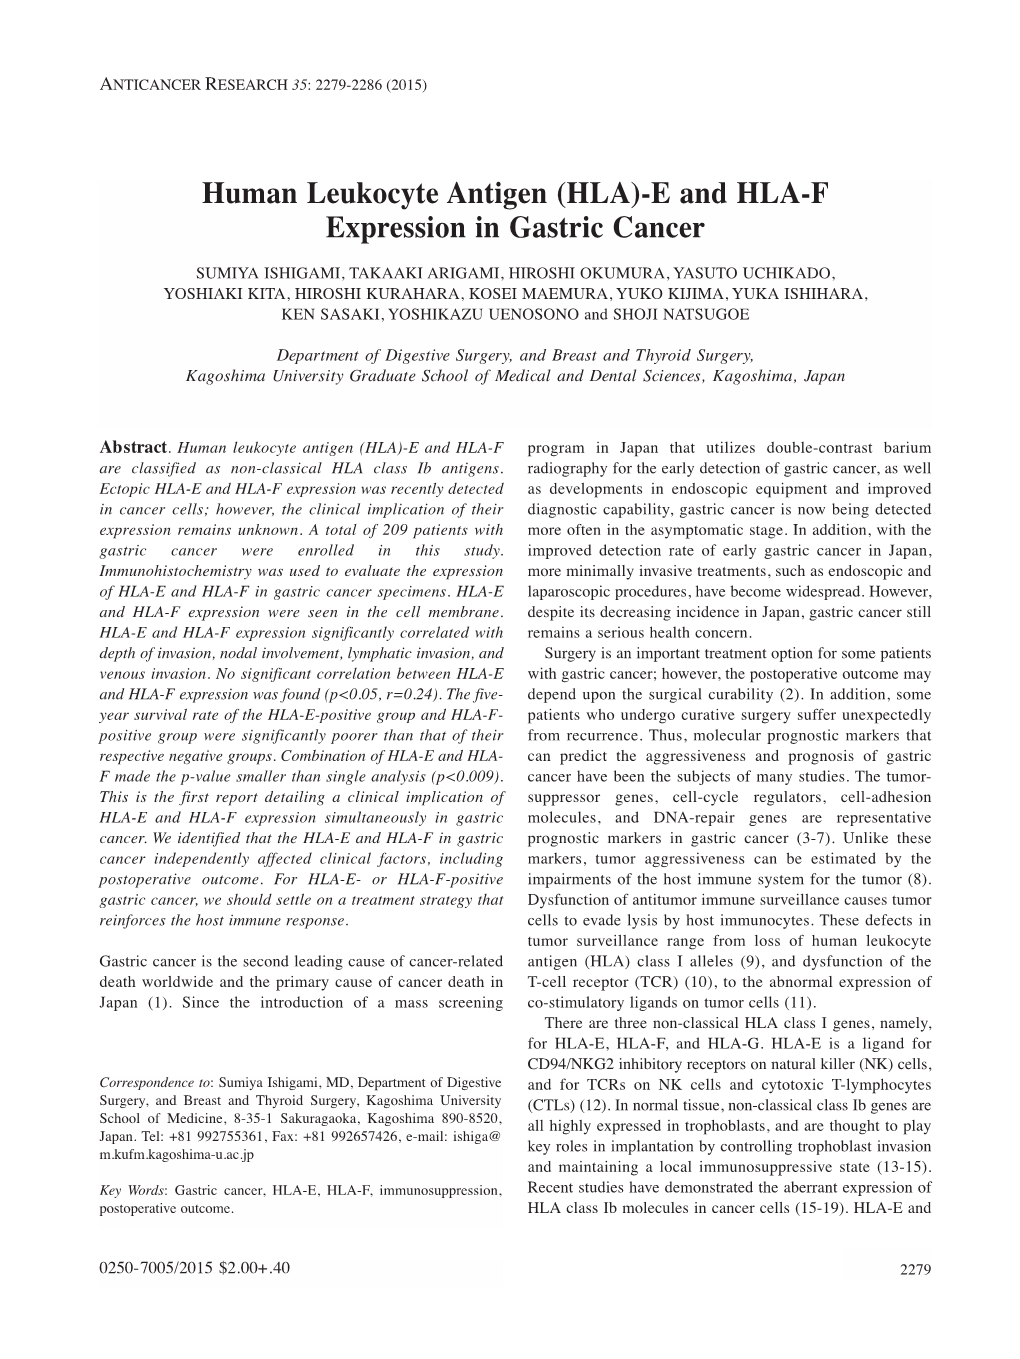 Human Leukocyte Antigen (HLA)-E and HLA-F Expression in Gastric Cancer